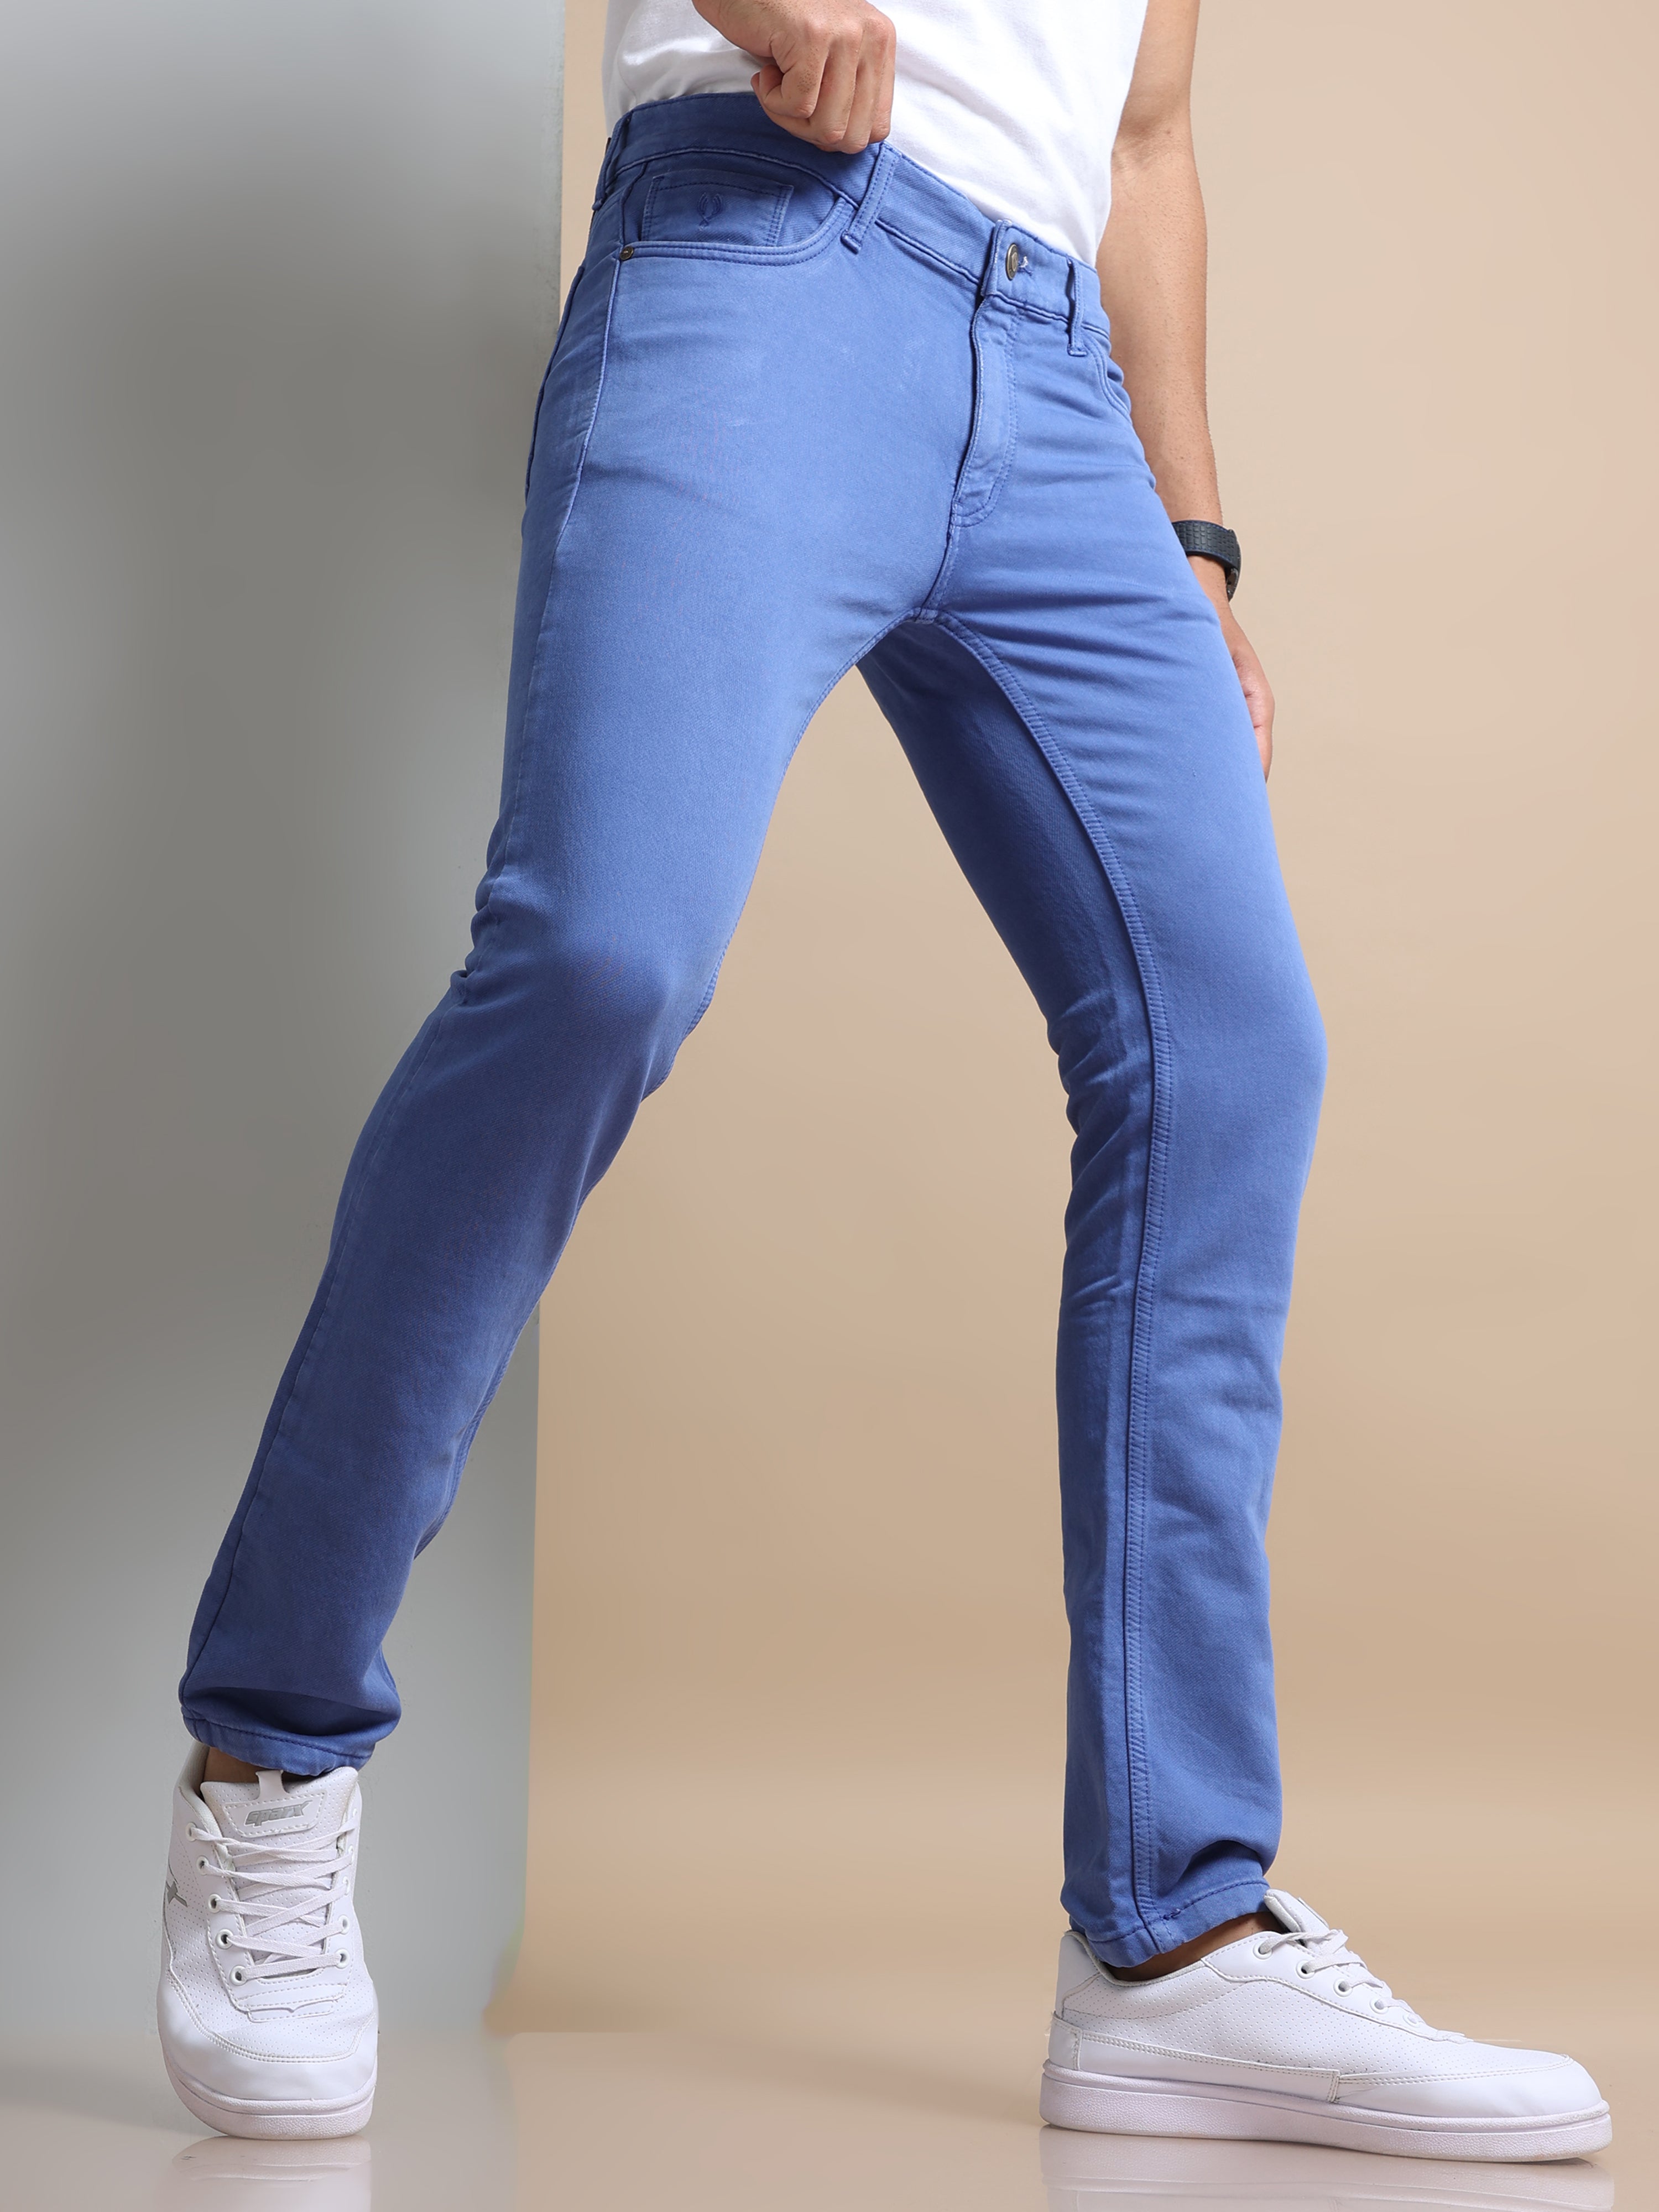 Denim Mens Jeans :Buy Denim Mens Jeans Online at Low Prices on Snapdeal.com